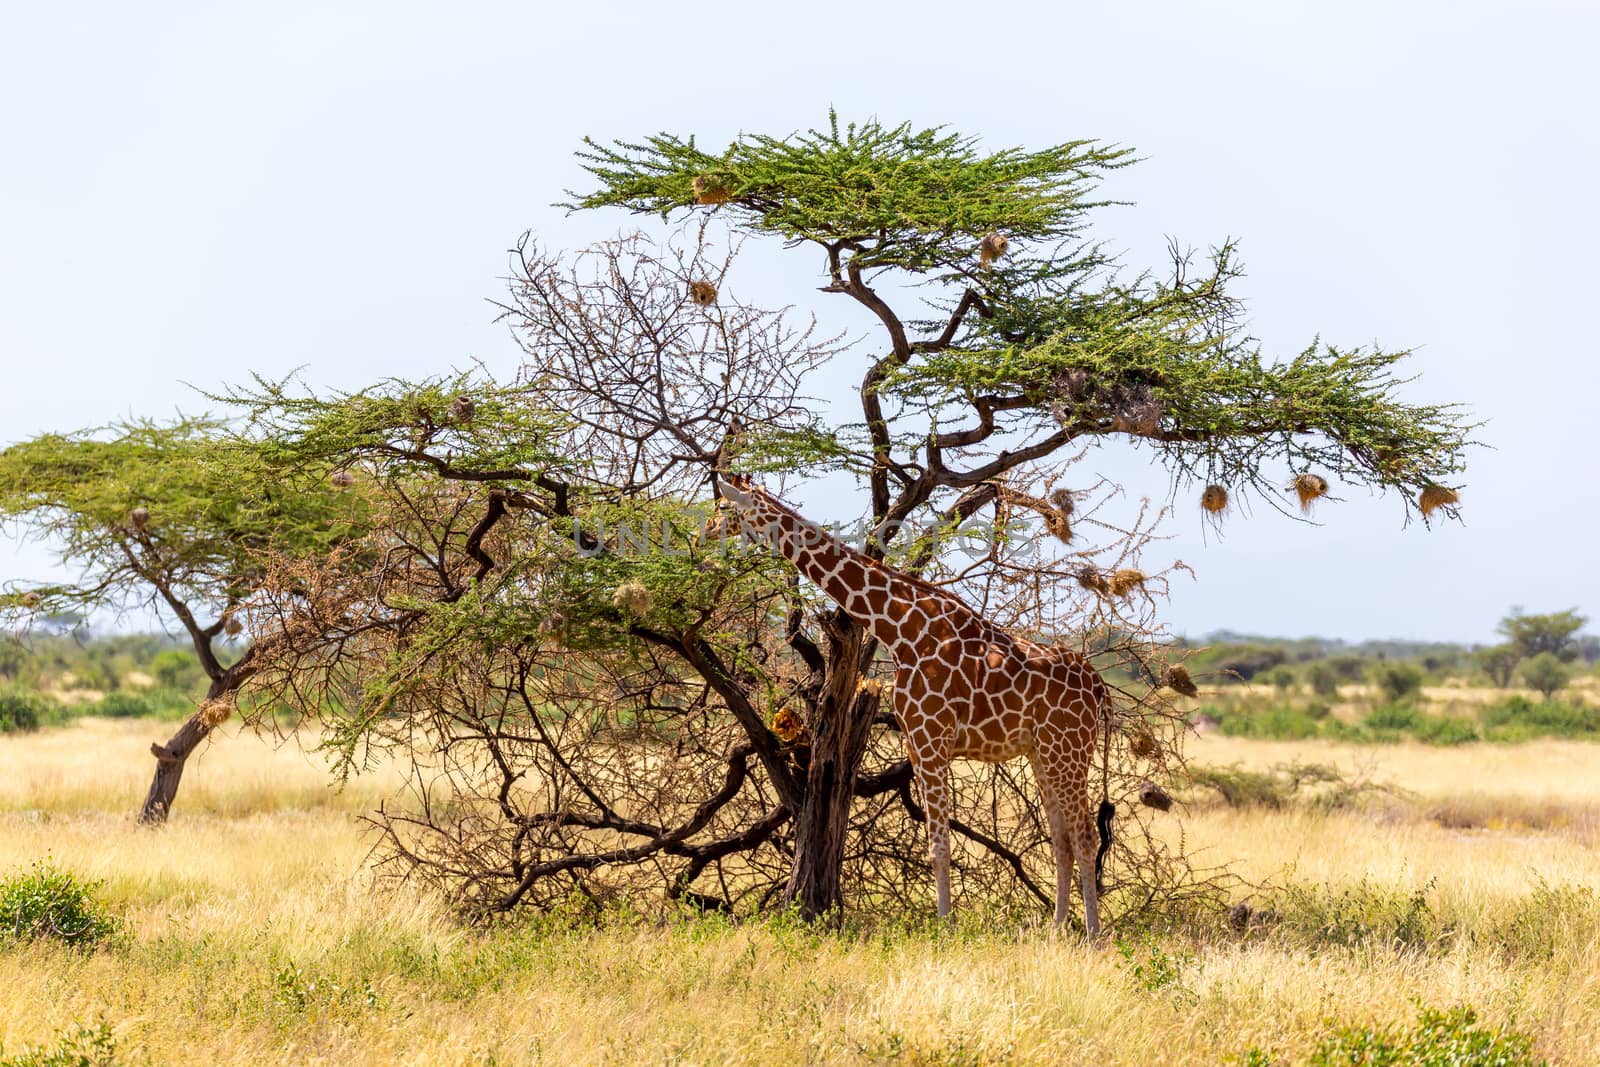 Two Somalia giraffes eat the leaves of acacia trees by 25ehaag6